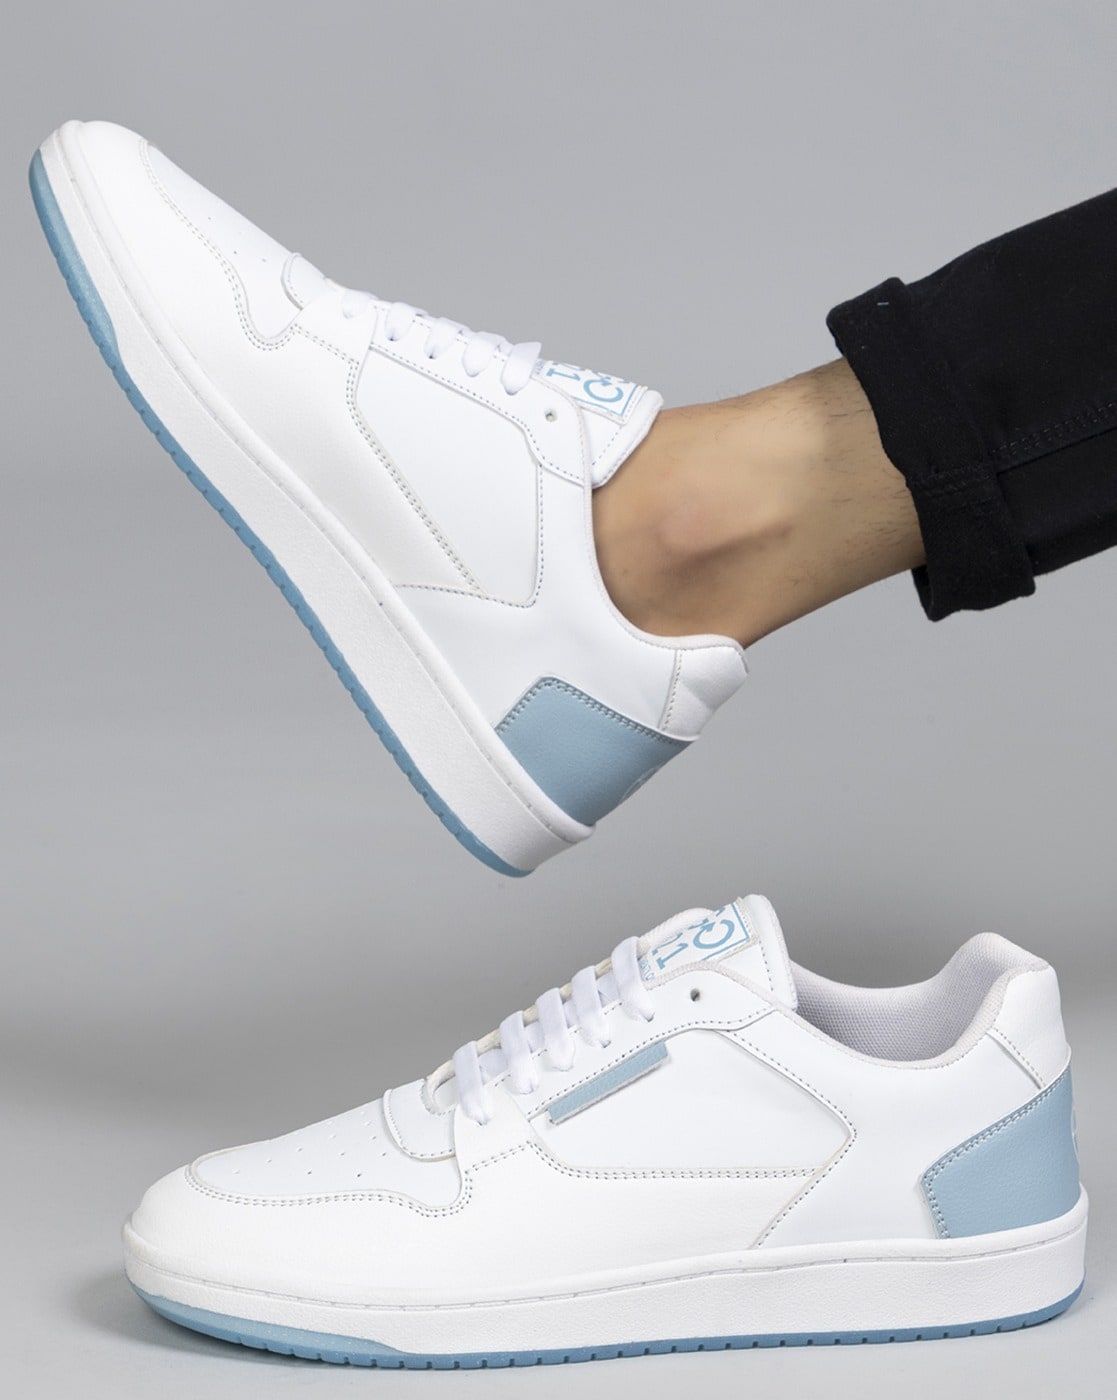 Buy Sky Blue Sneakers for Men by GO21 Online